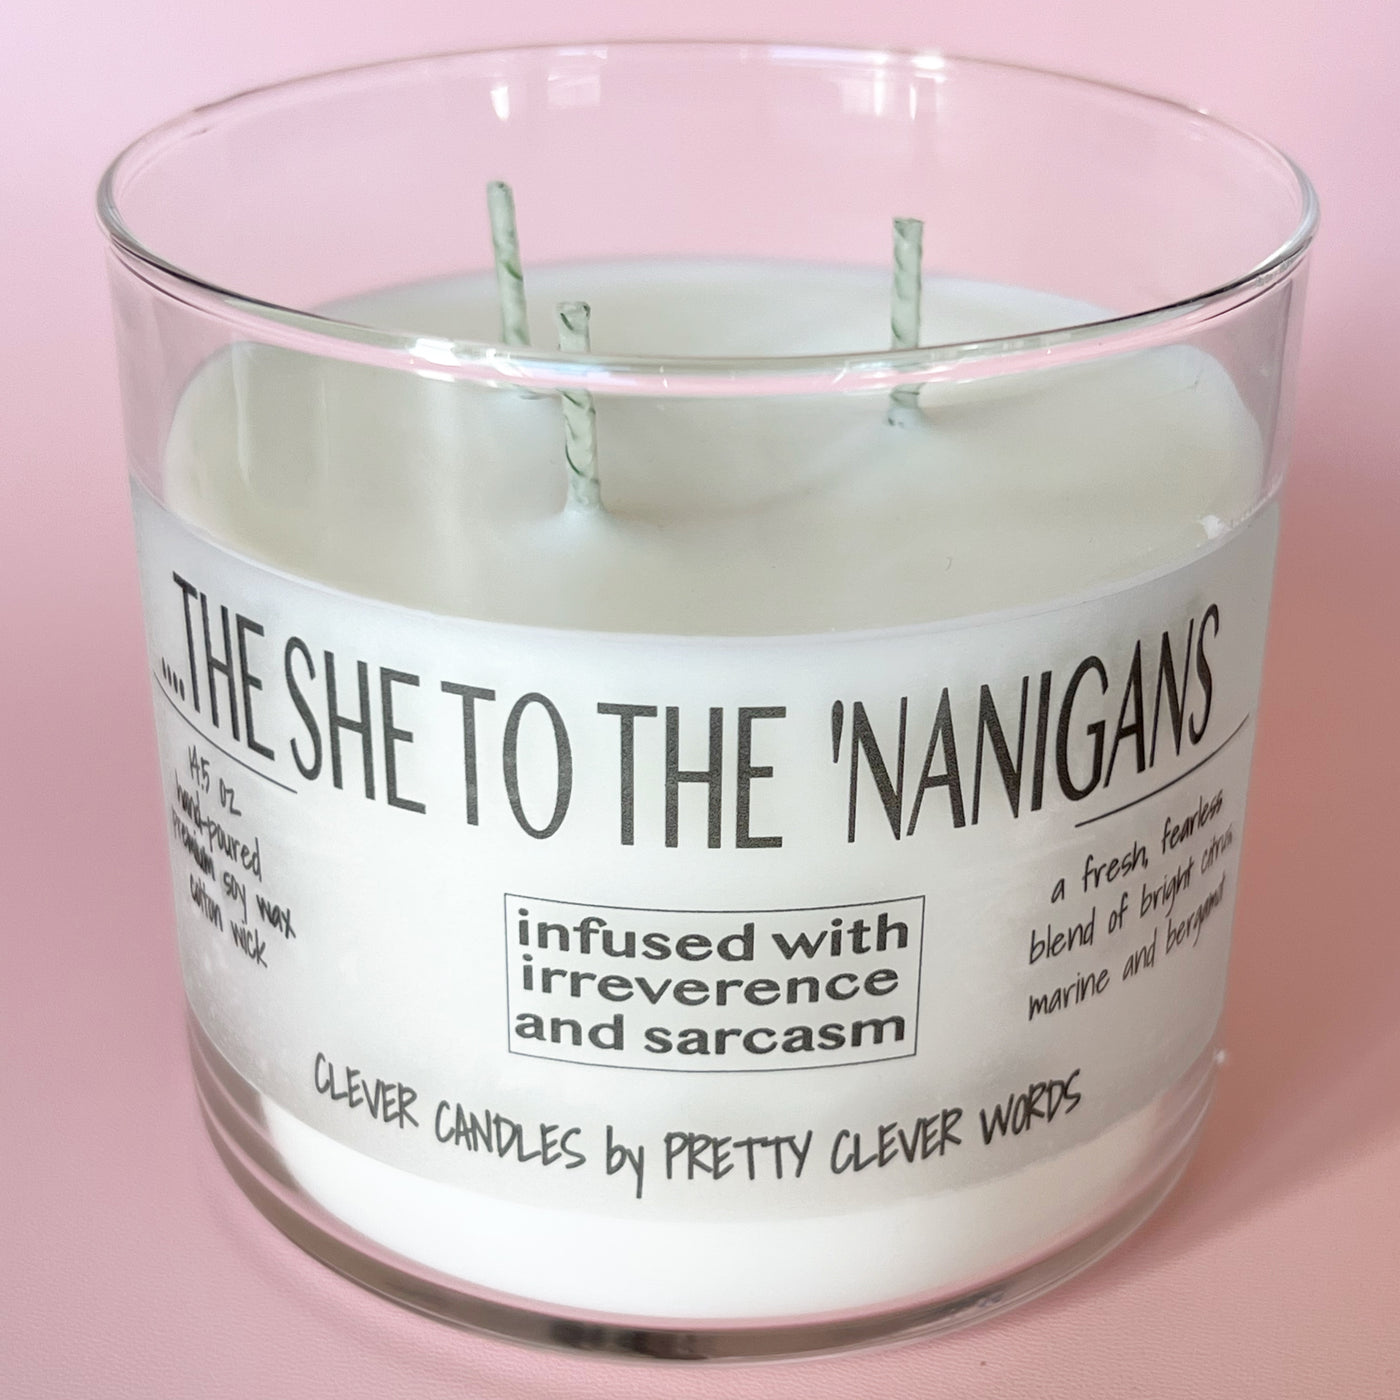 the she to the 'nanigans - 14.5 oz citrus bergamot candle